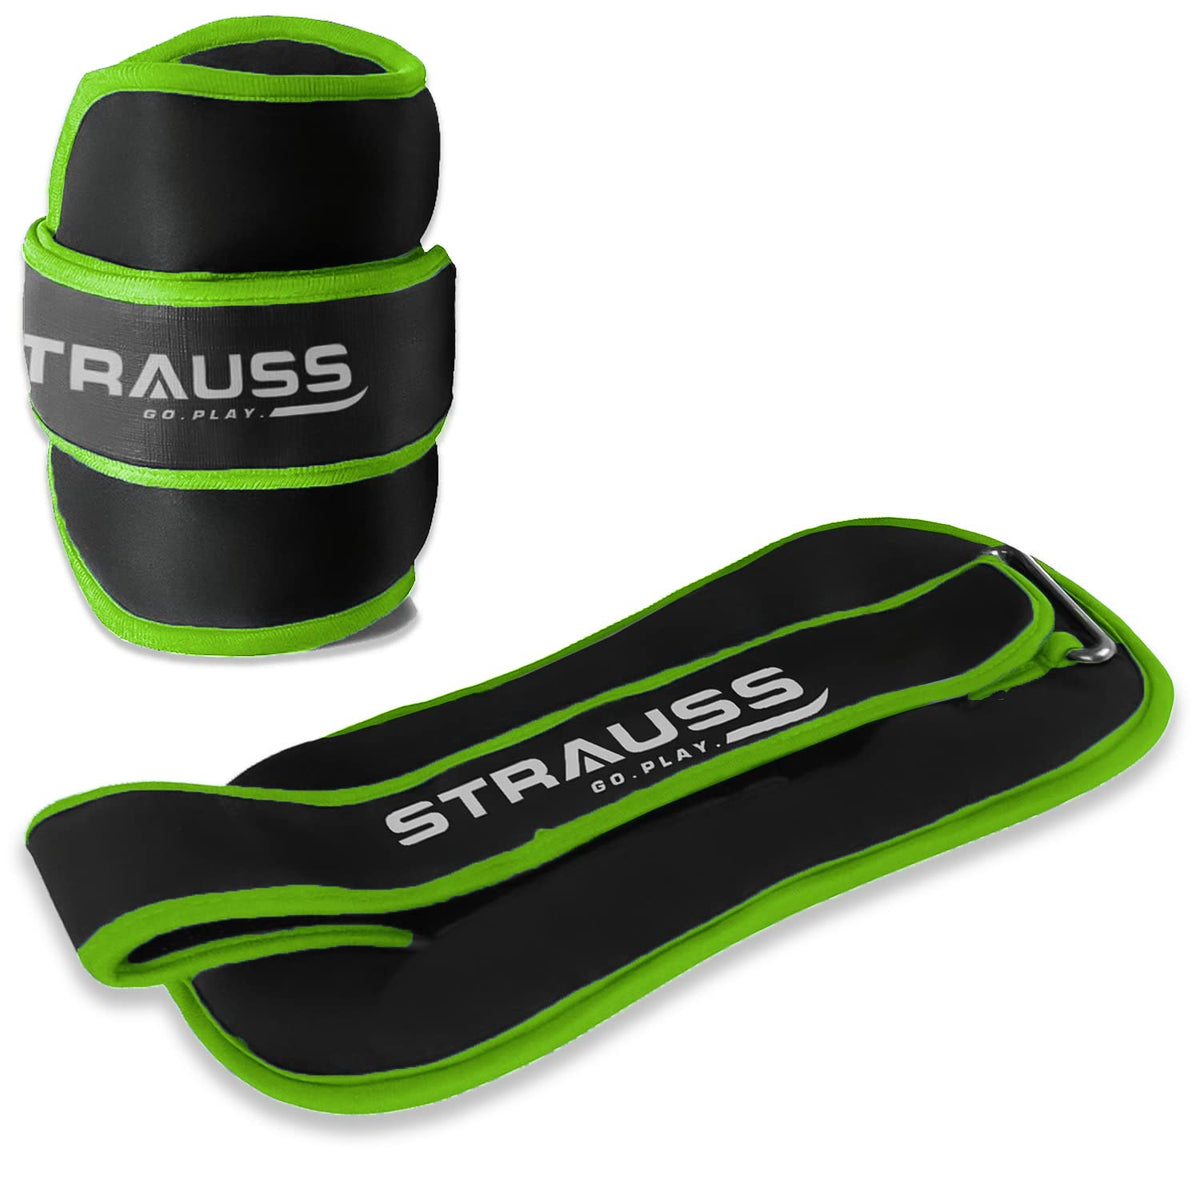 Strauss Round Shape Ankle Weight, 1.5 Kg (Each), Pair, (Green)